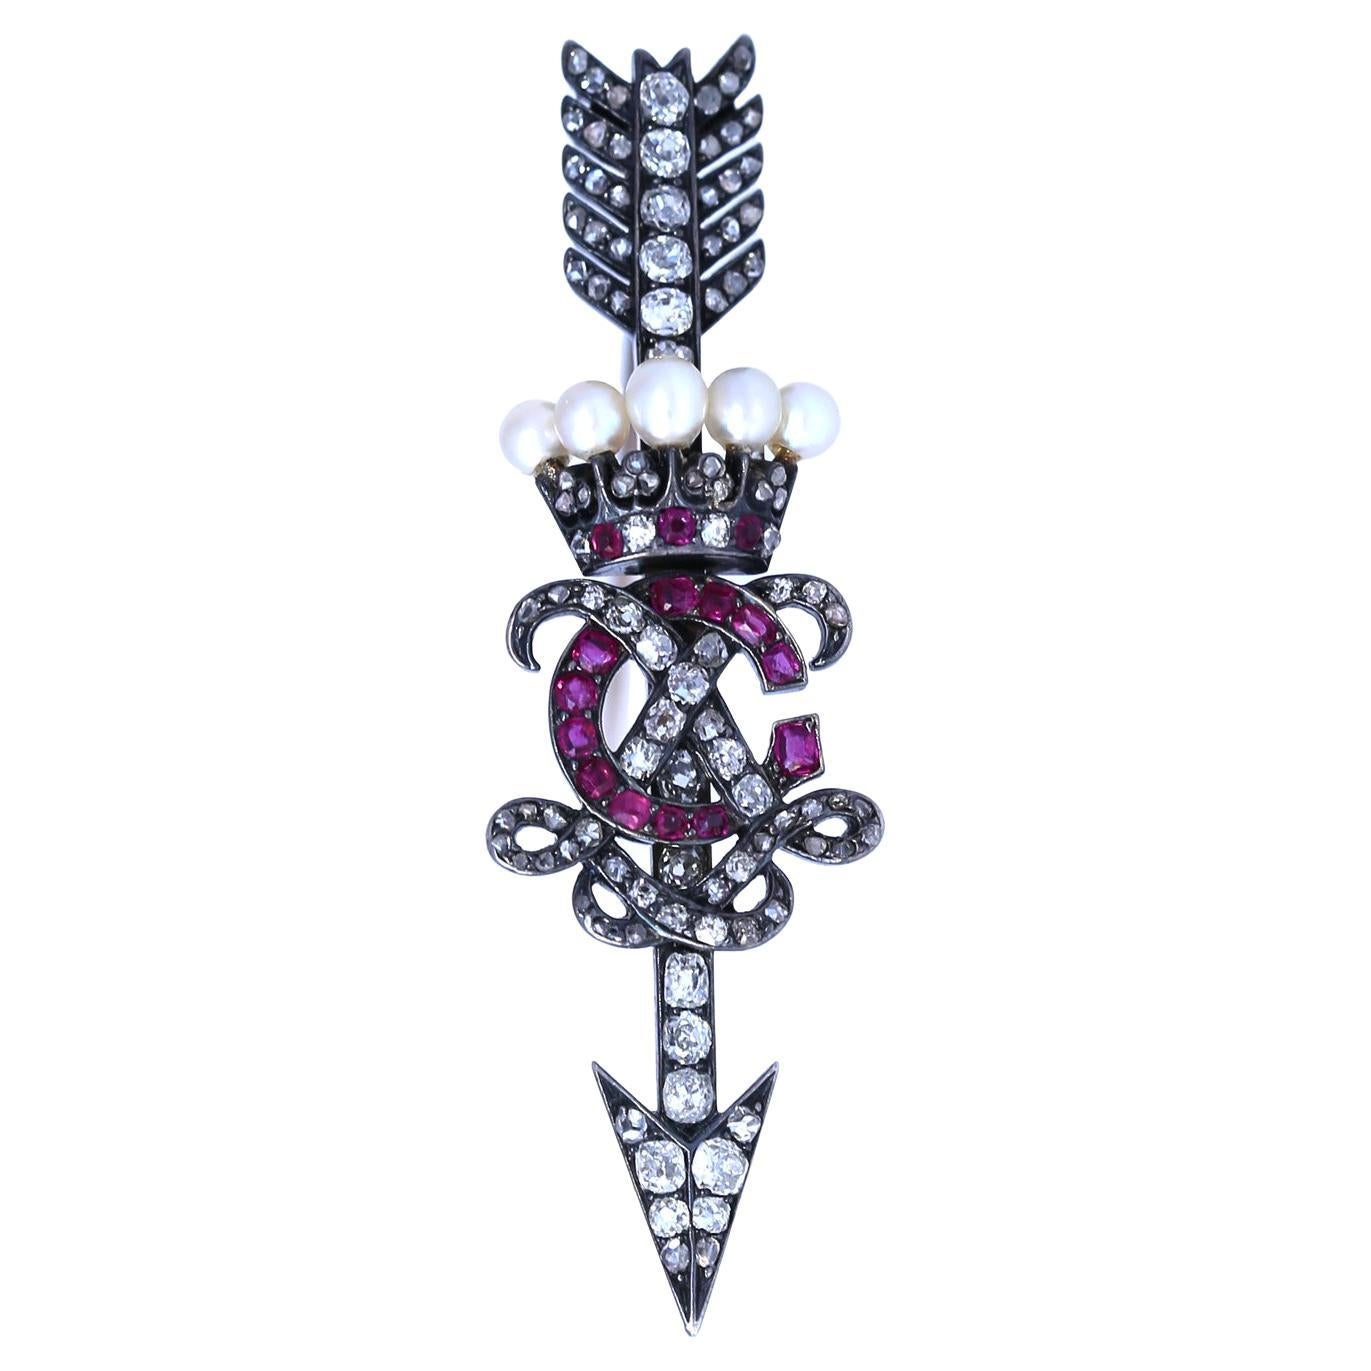 Victorian Brooch Arrow Crown Rubies Diamonds Pearls Gold Letters C X, 1900